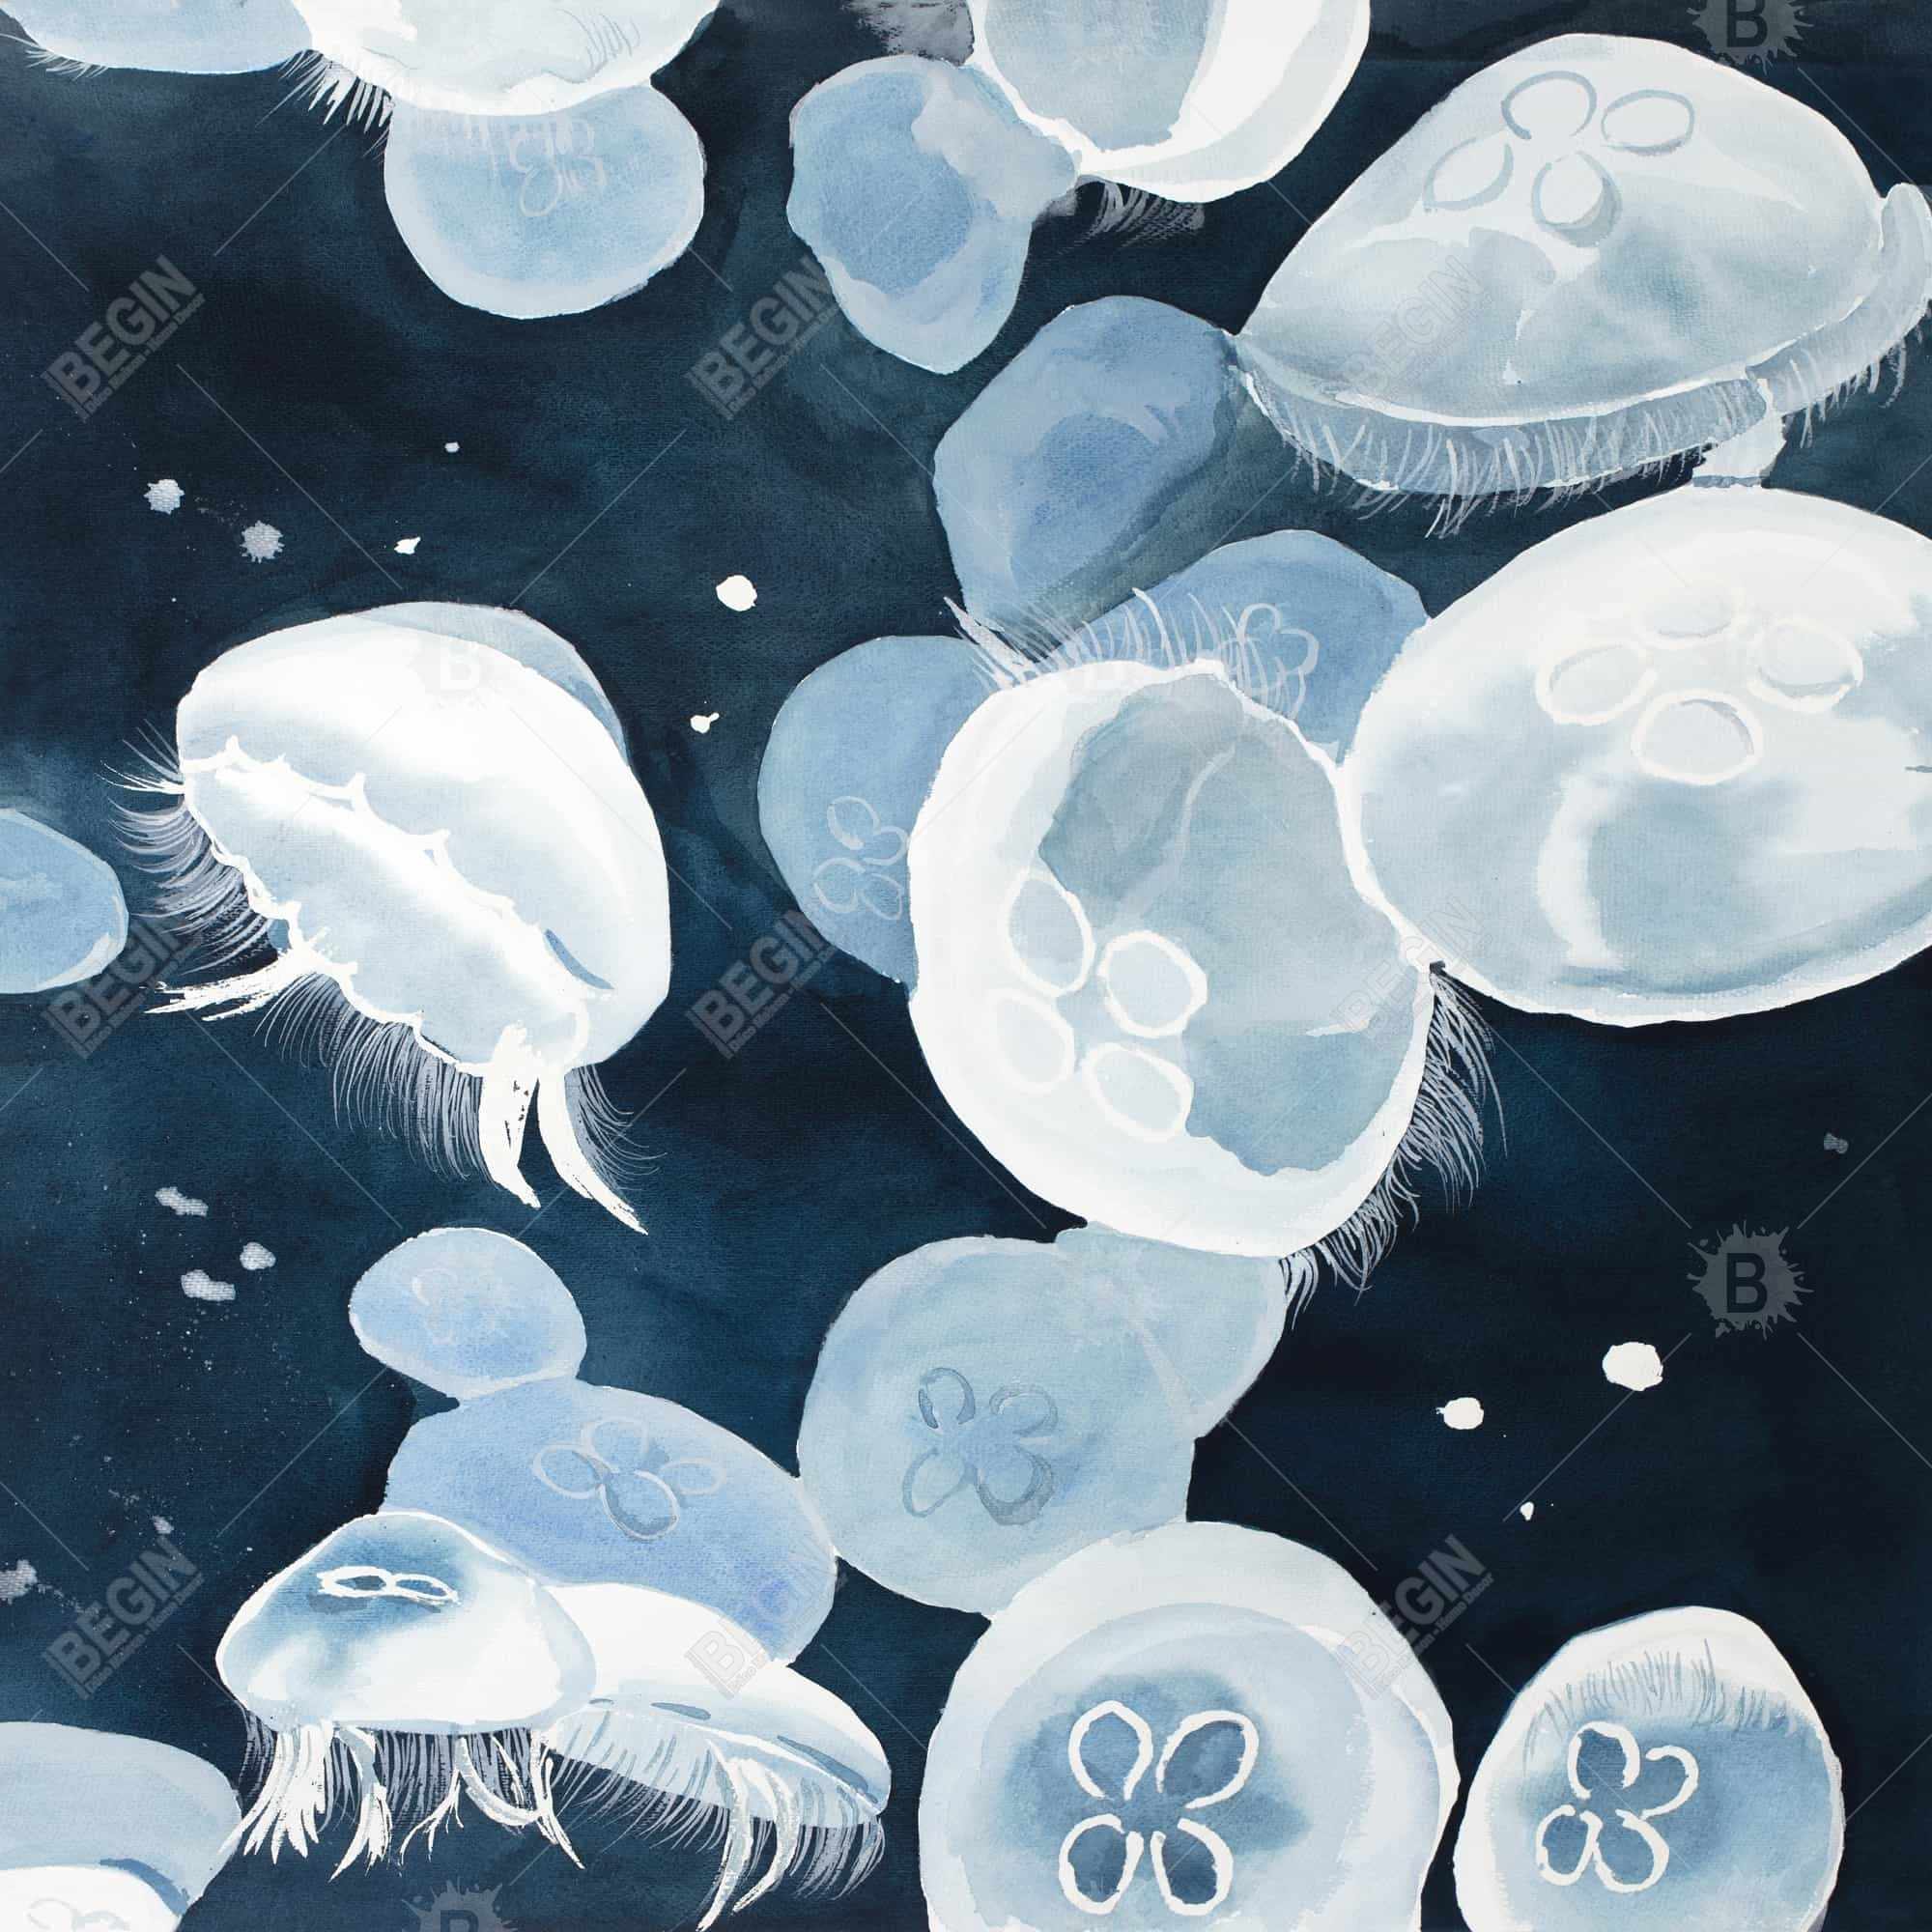 Jellyfishs